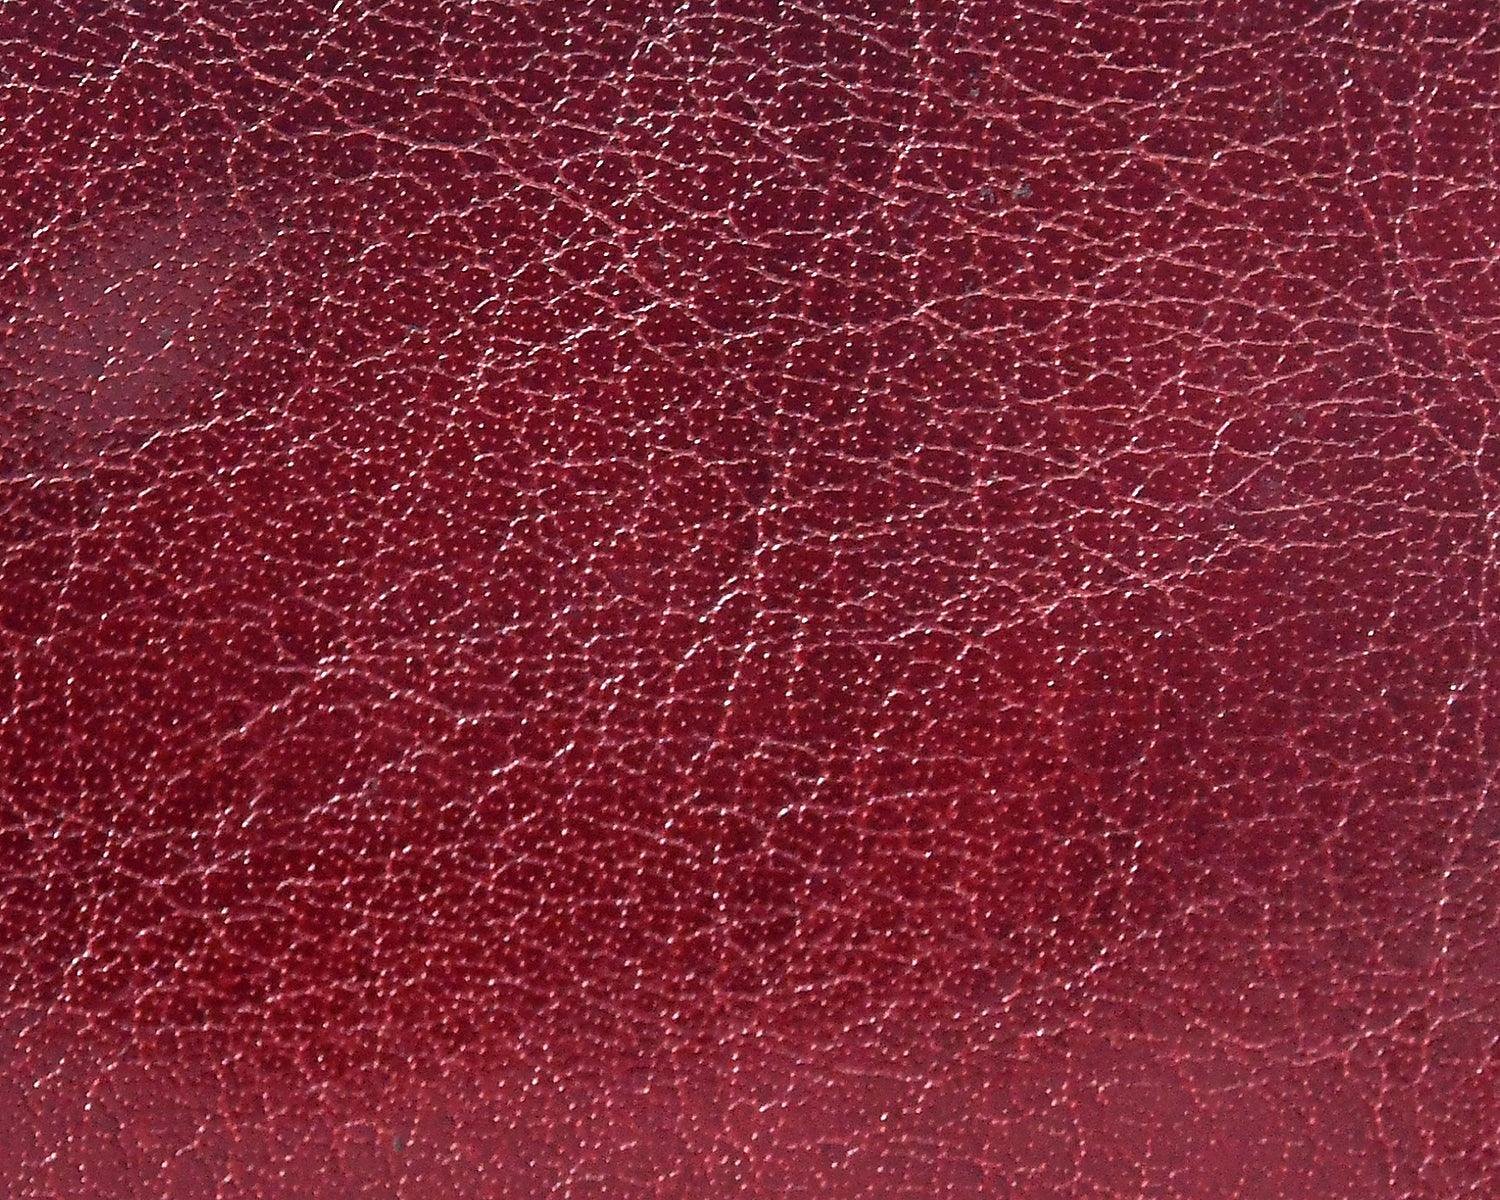 Celtic Burgundy Color Pure Leather Wallet For Men - CELTICINDIA